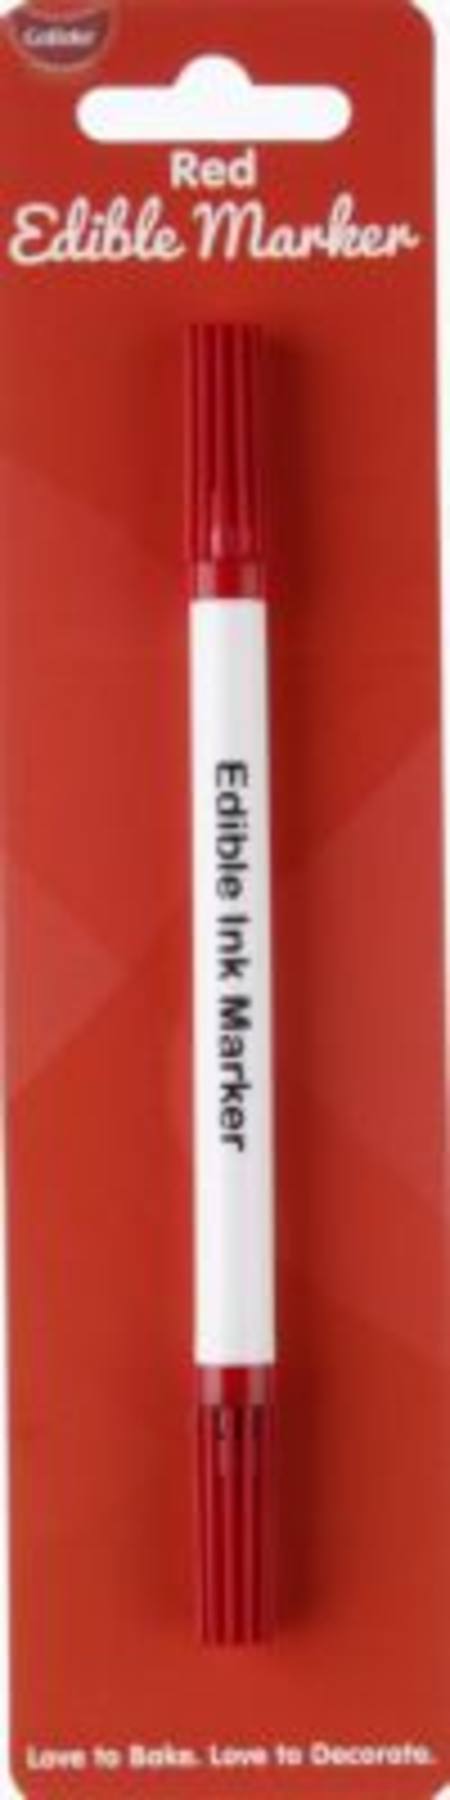 Edible Marker Pen Red